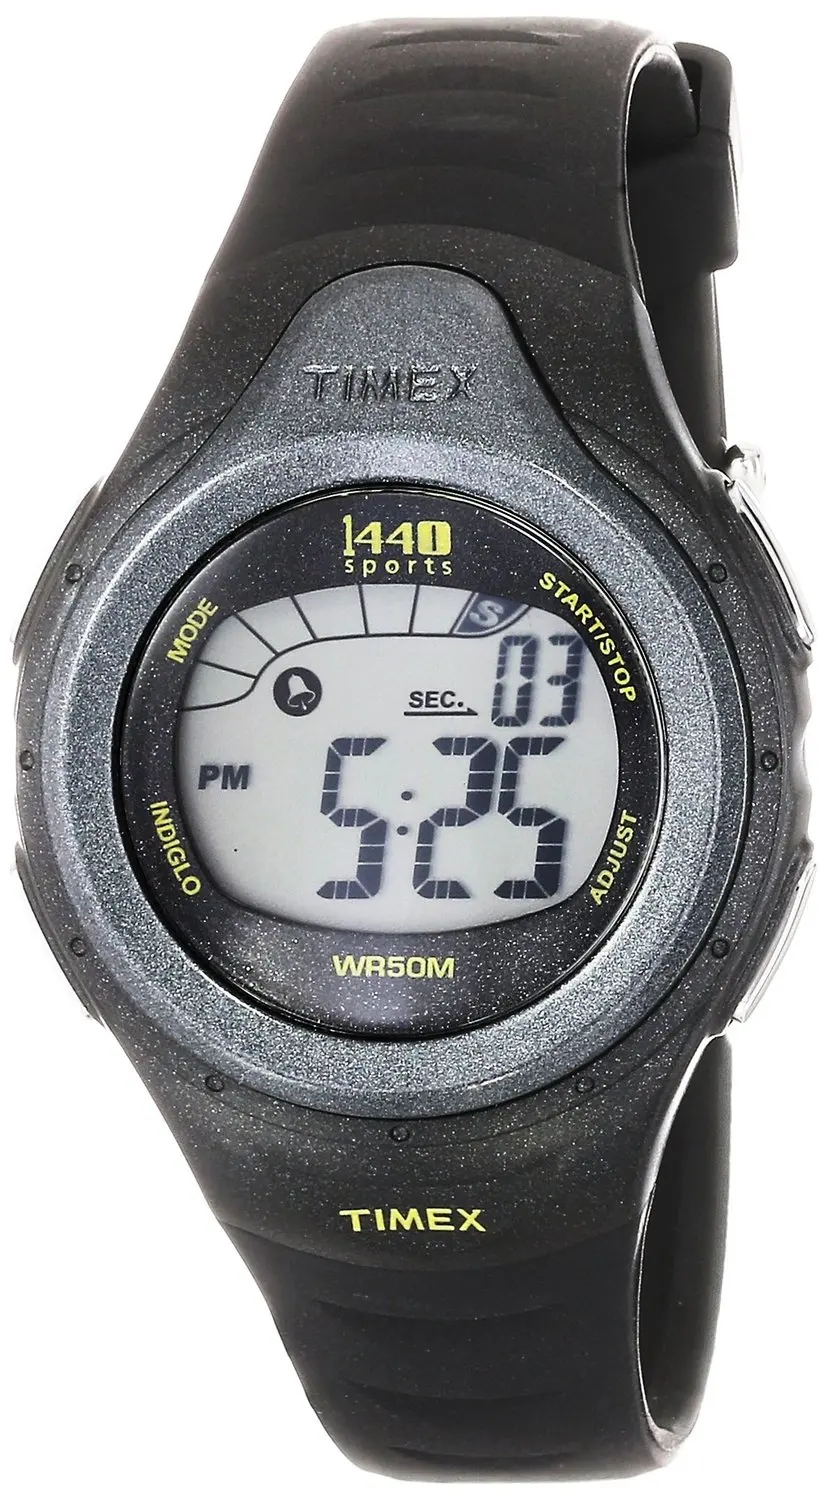 1440 sports watch instructions